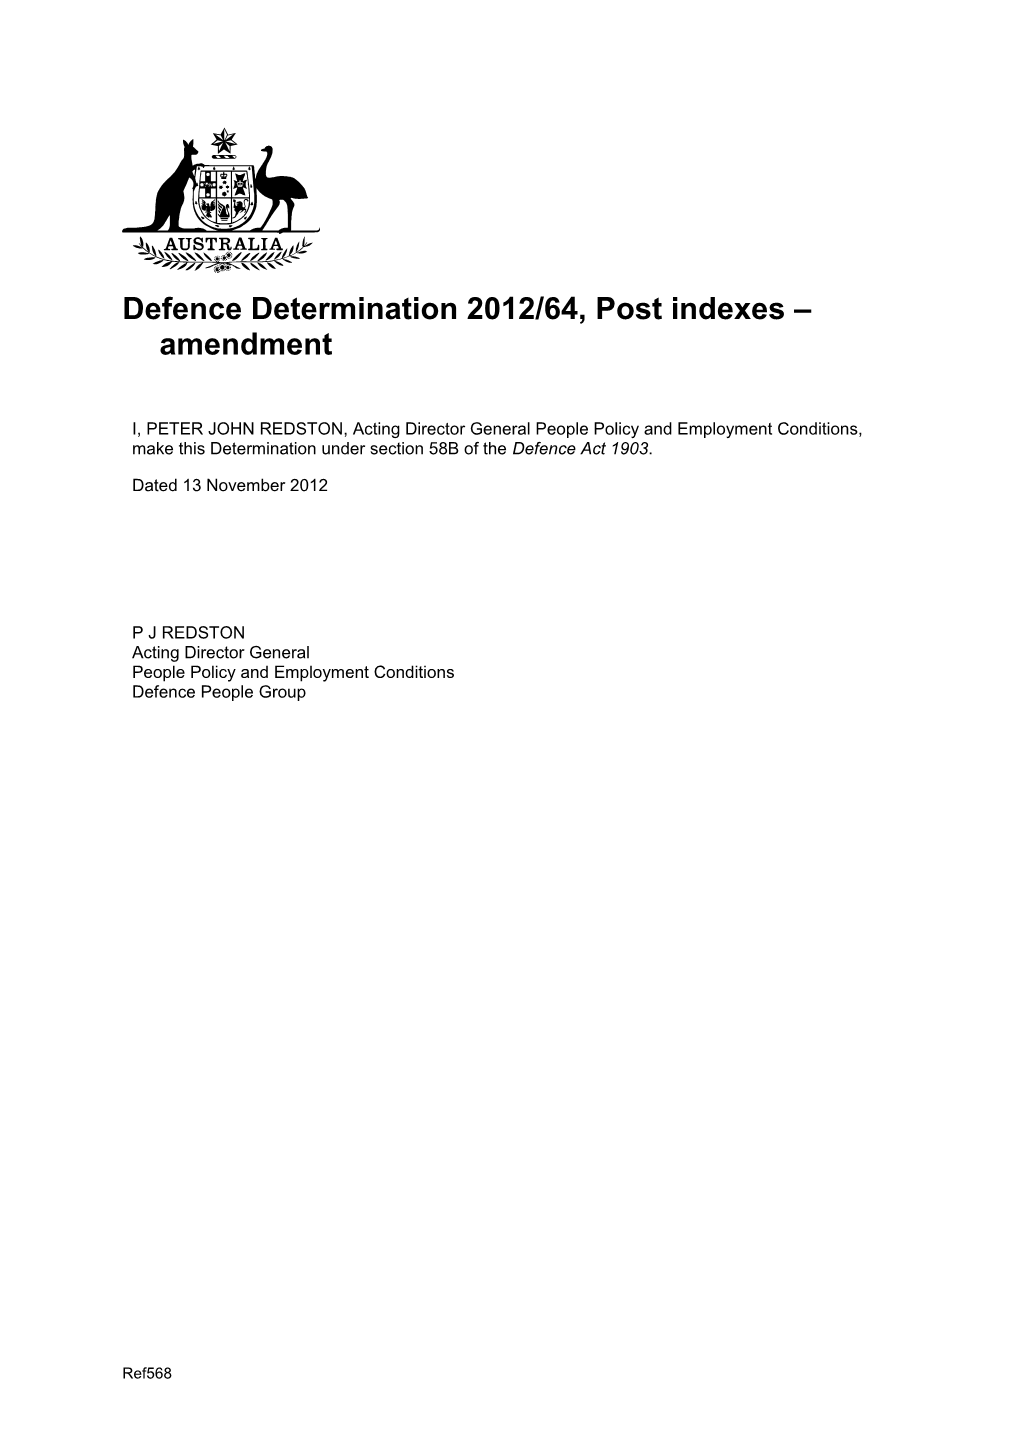 Defence Determination 2012/64, Post Indexes Amendment